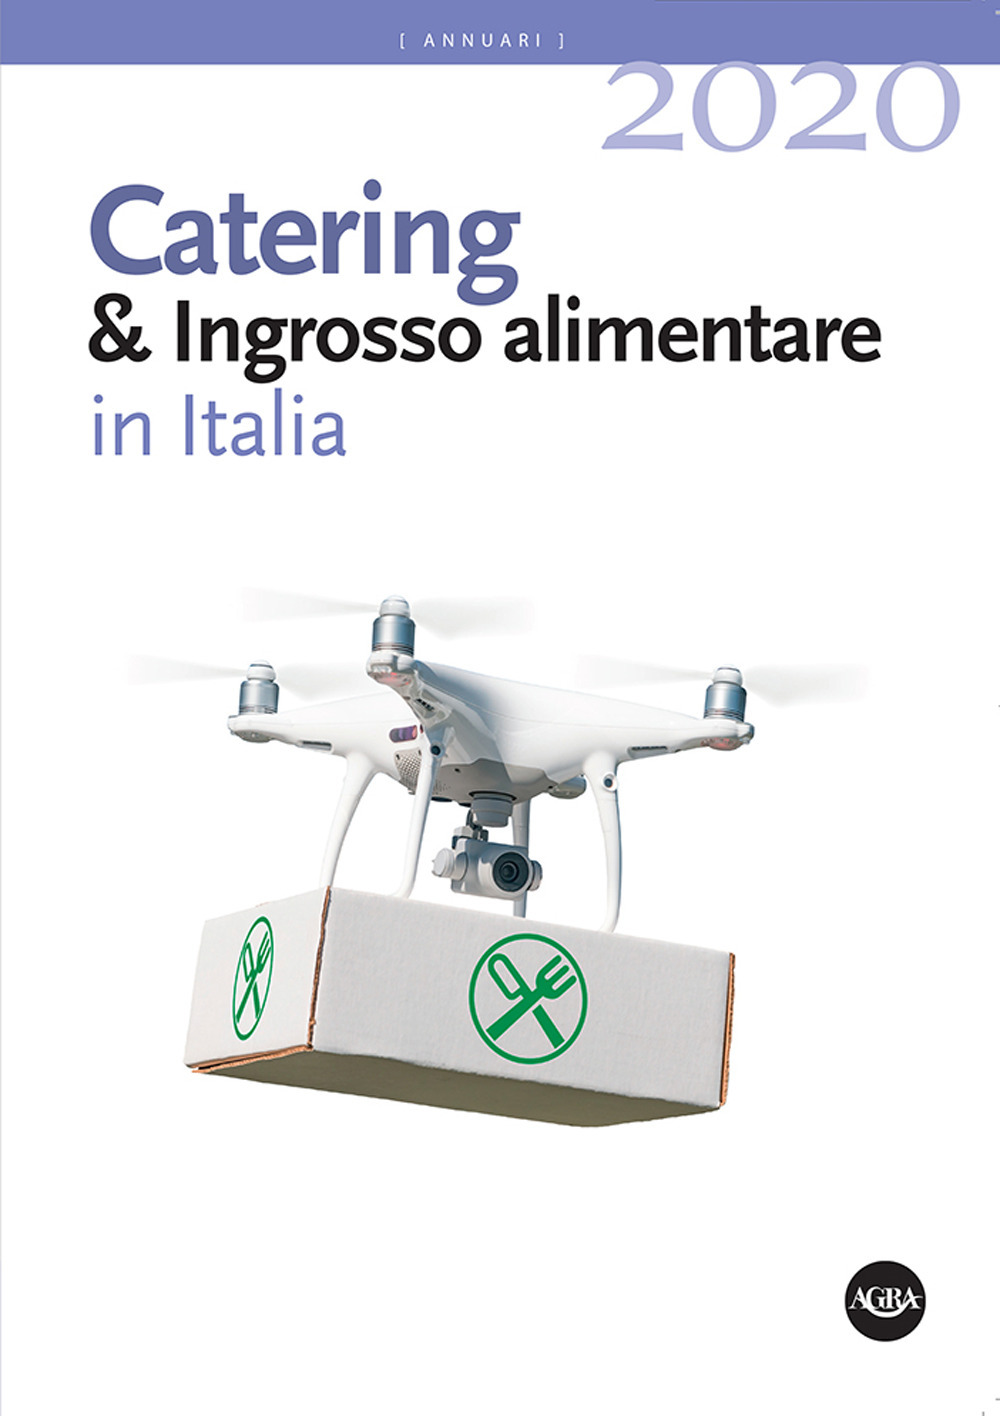 Annuario catering & ingrosso alimentare in Italia (2020)